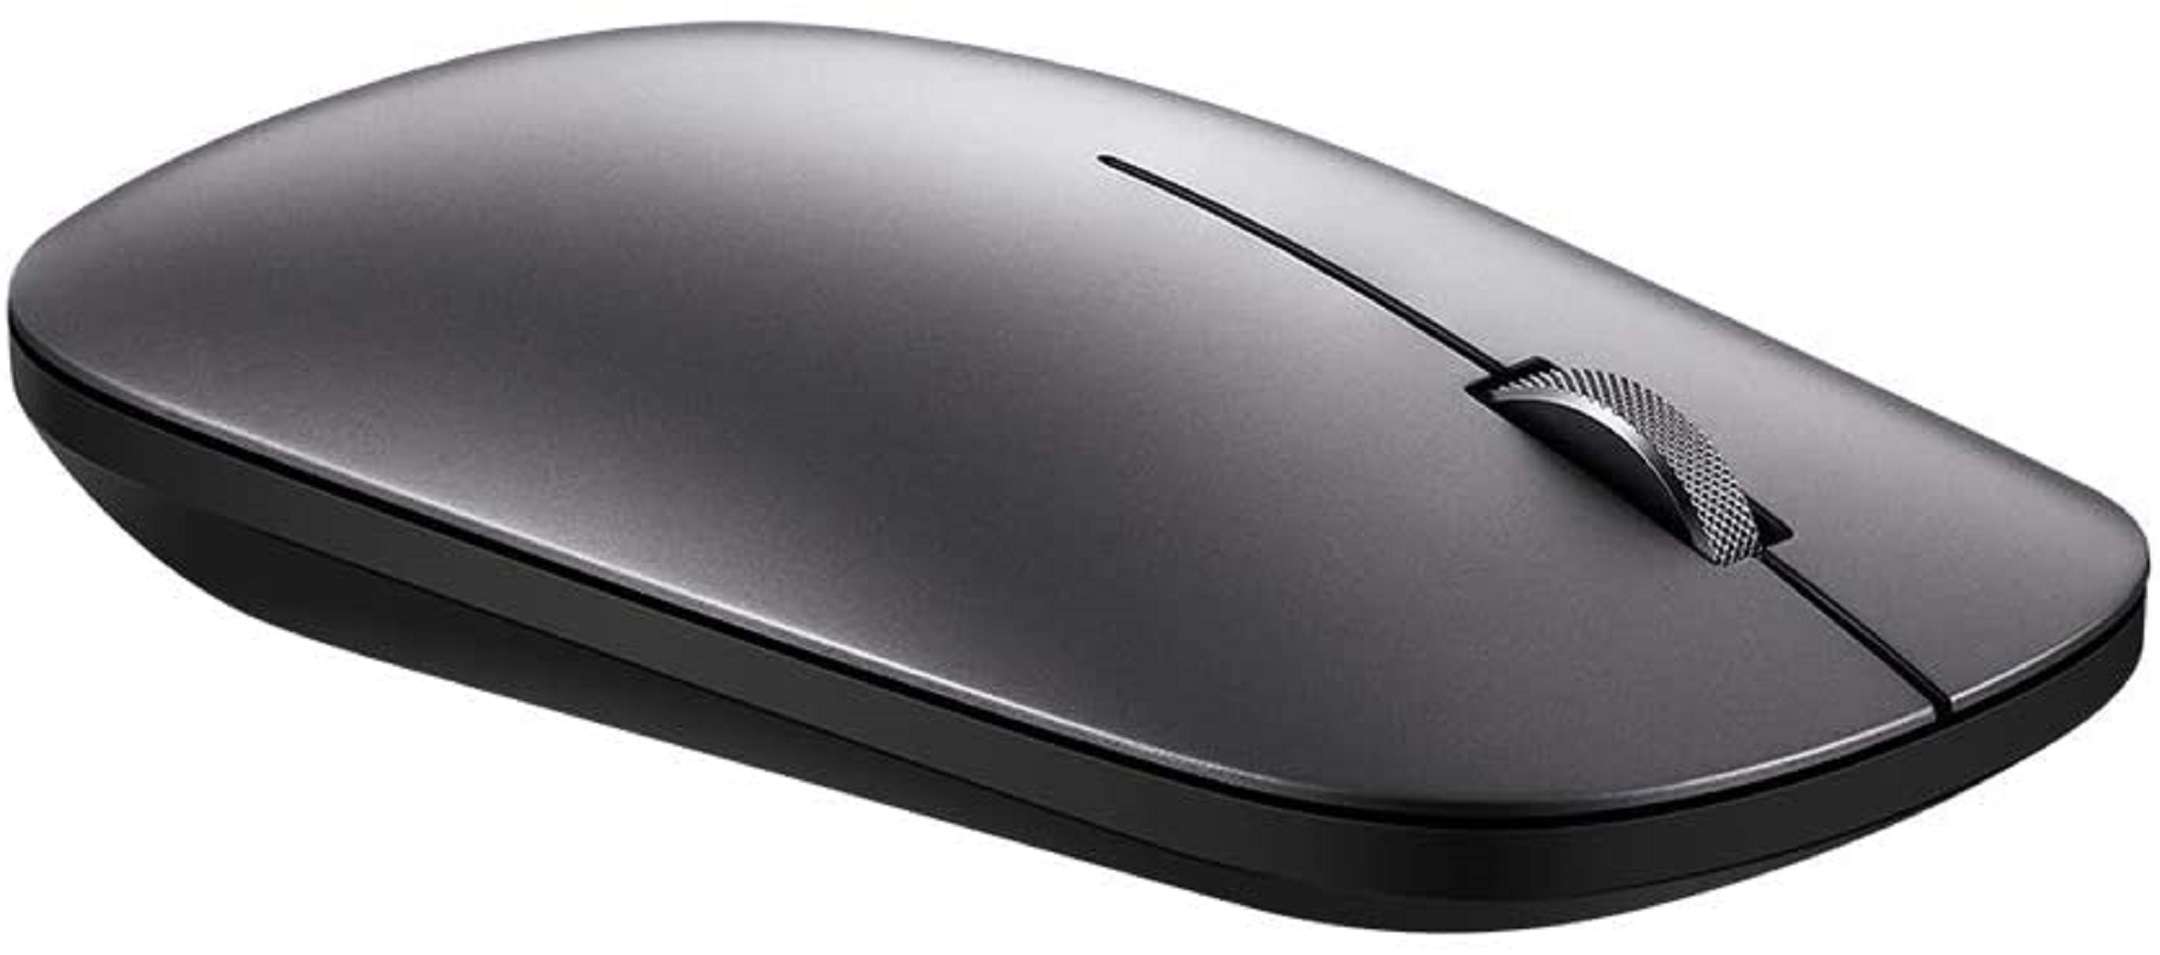 HUAWEI Bluetooth Mouse: eleganza ed efficienza in offerta su Amazon